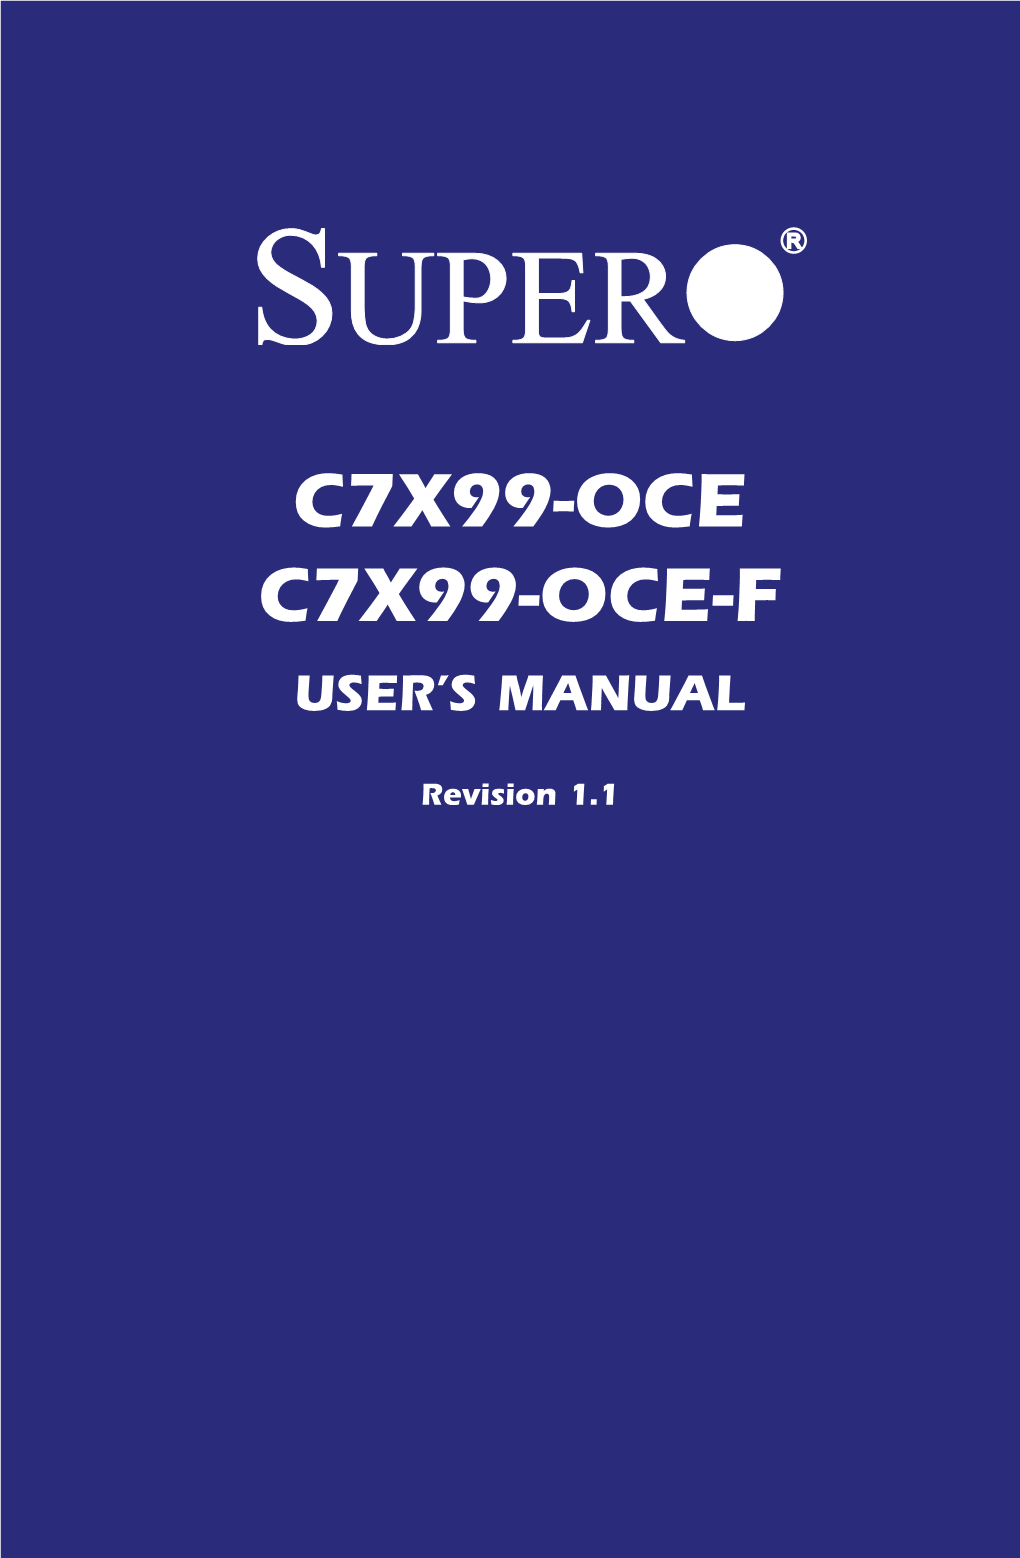 C7x99-Oce C7x99-Oce-F User’S Manual